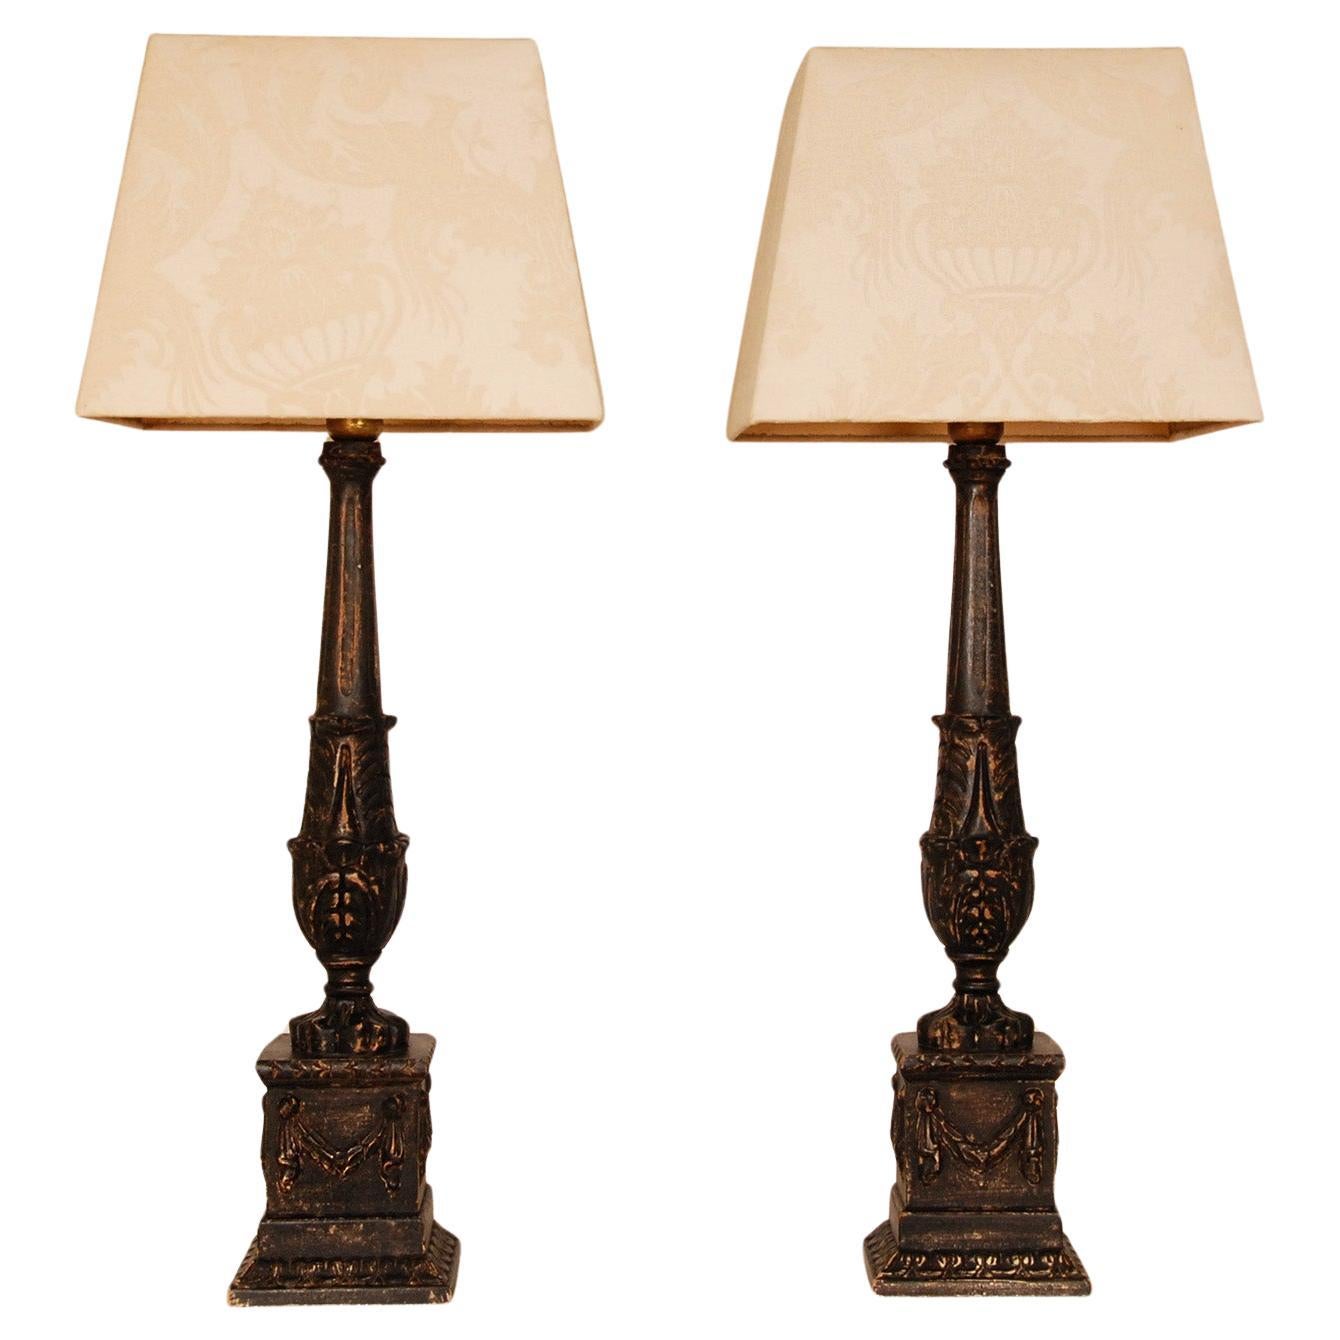 Französische ebonisierte Lampen, neoklassizistische geschnitzte Säulen-Barock-Tischlampen, Paar 